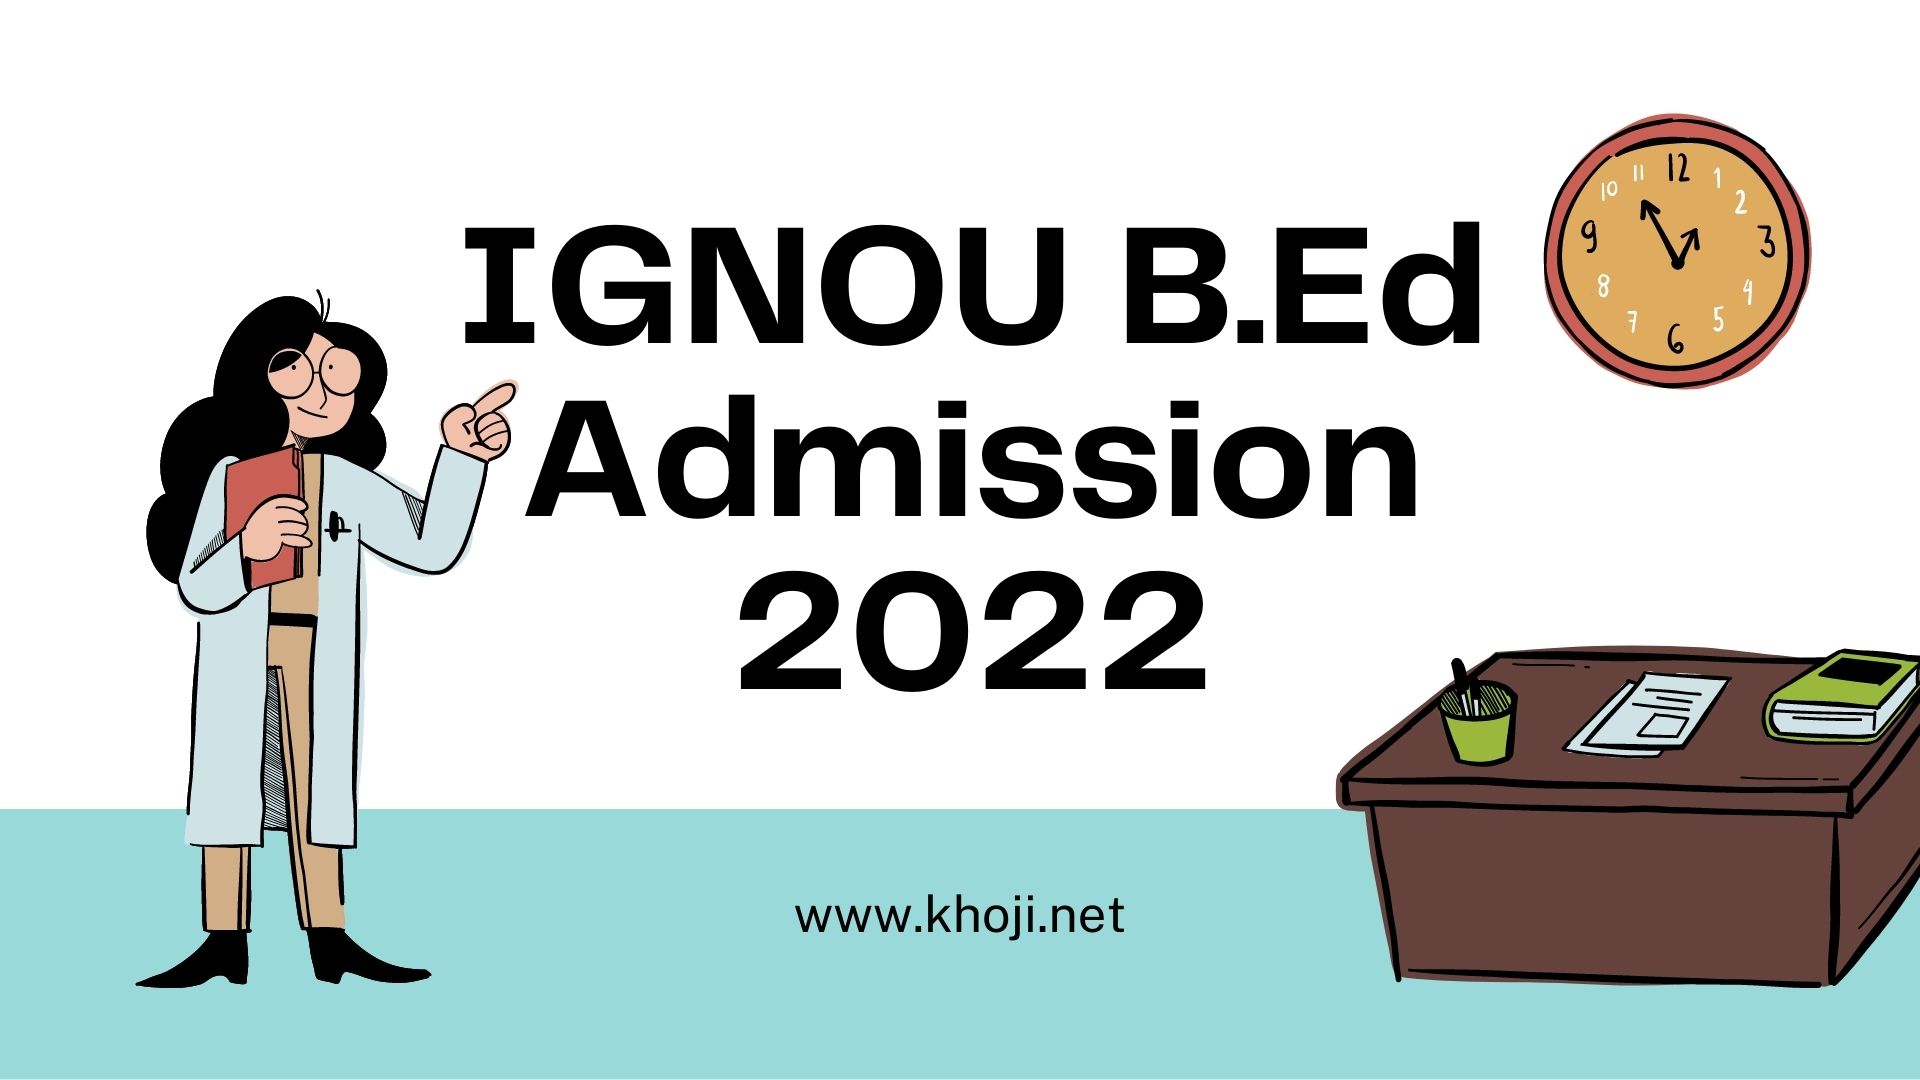 IGNOU B.Ed Admission 2022